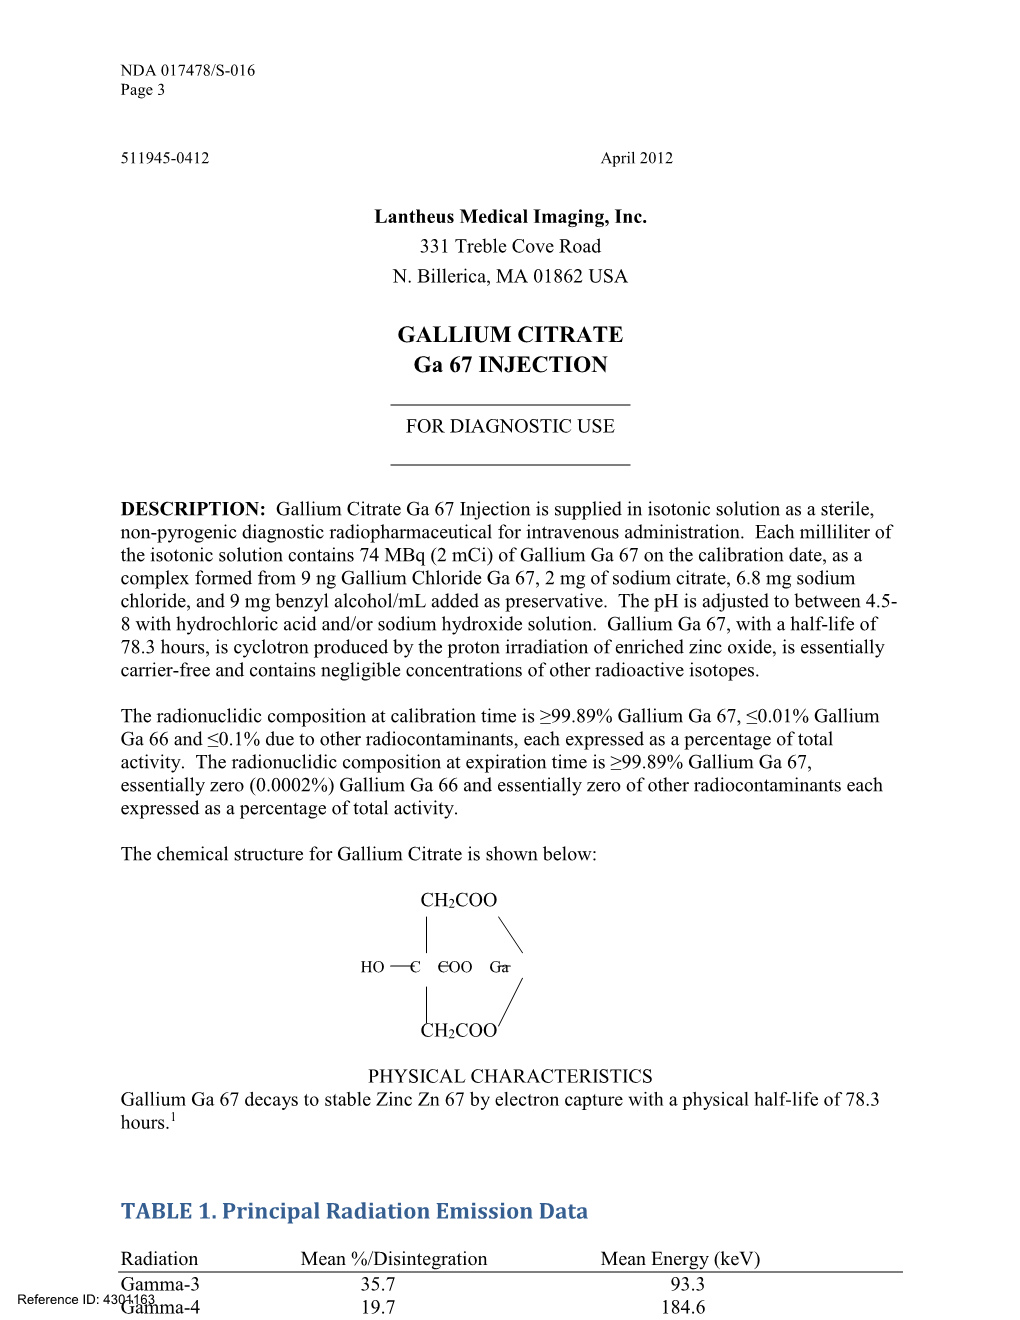 GALLIUM CITRATE Ga 67 INJECTION TABLE 1. Principal Radiation